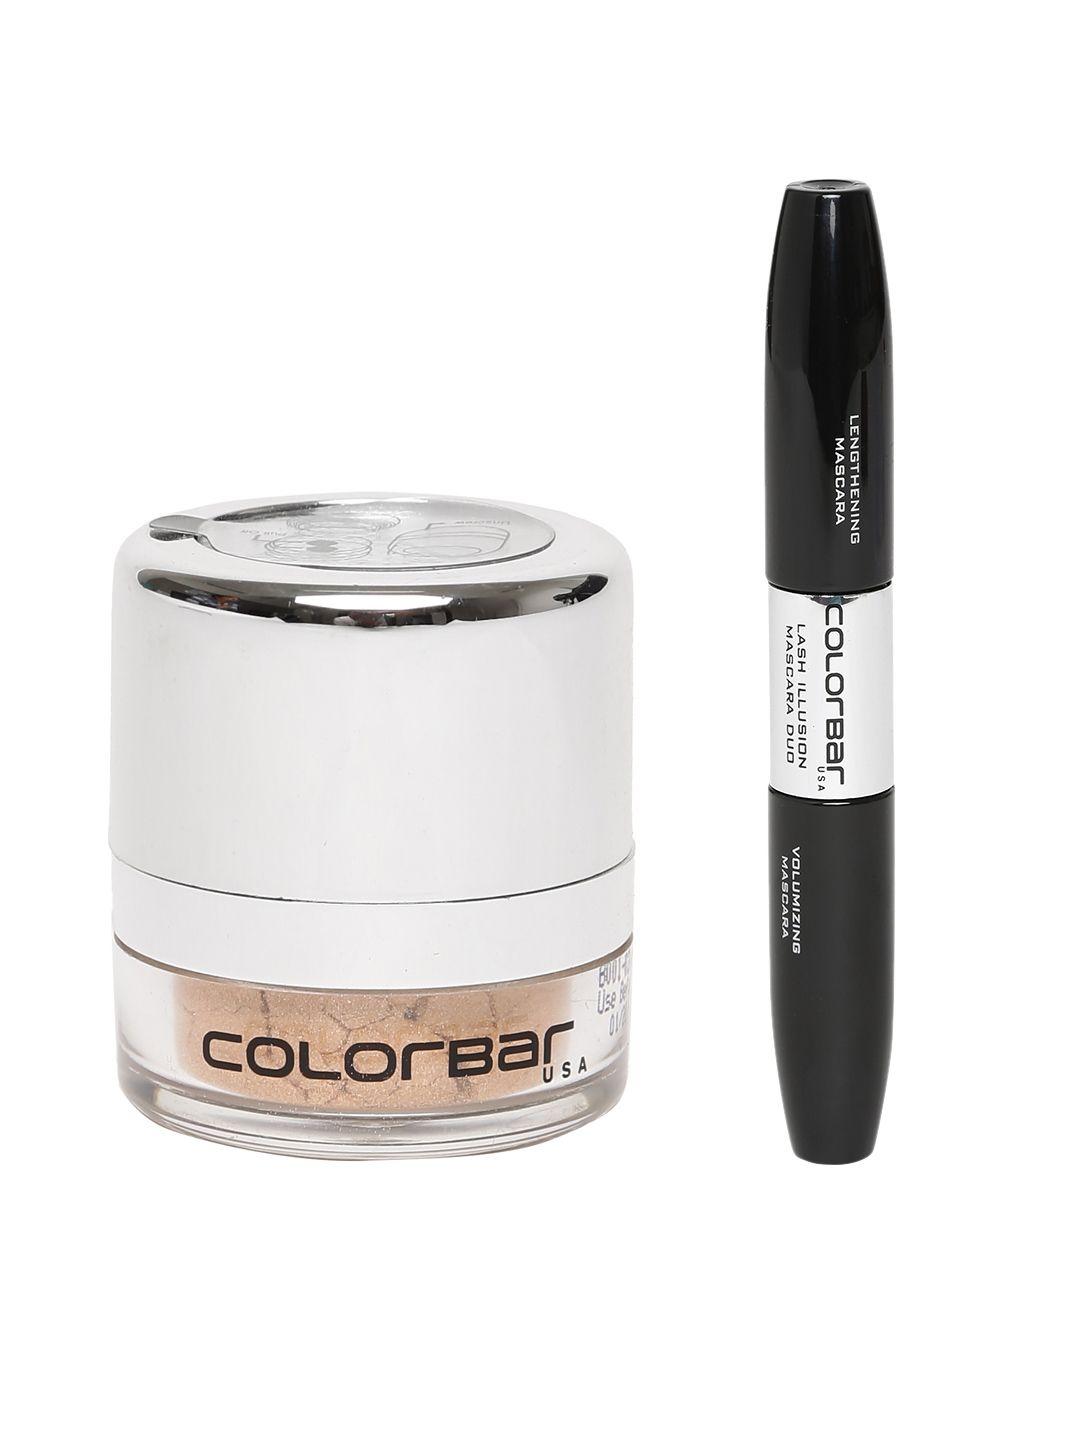 colorbar pack of 2 mascara brow pencil & shimmer